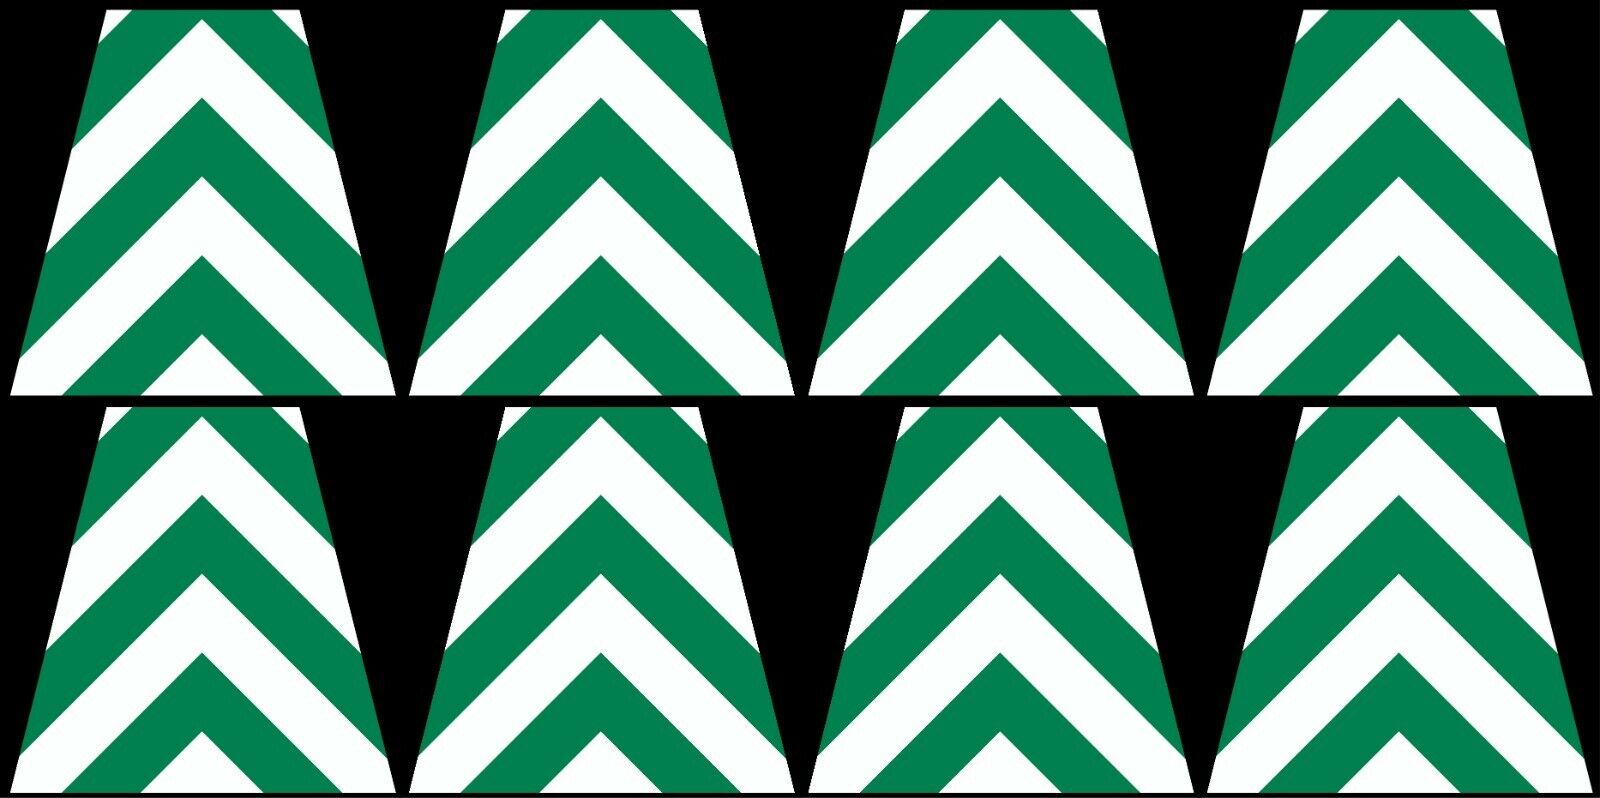 8 Fully Reflective Green and White Chevron Helmet Tetrahedron Tet Trapezoid